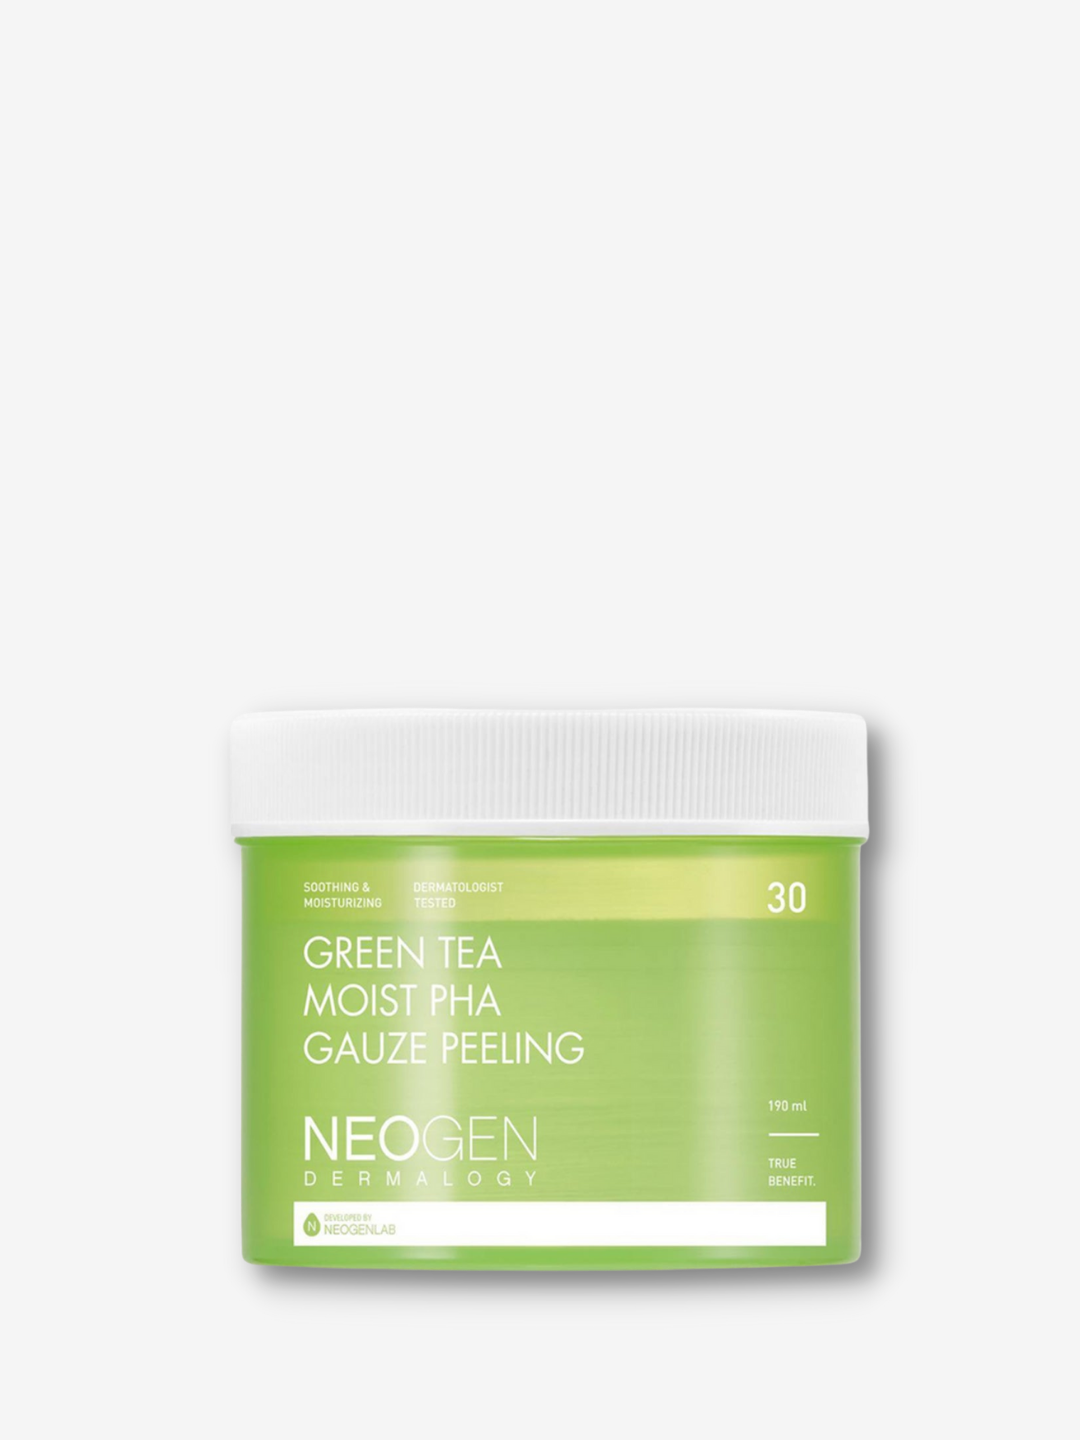 NEOGEN - Green Tea Moist PHA Gauze Peeling - 190ml (30 Pads)